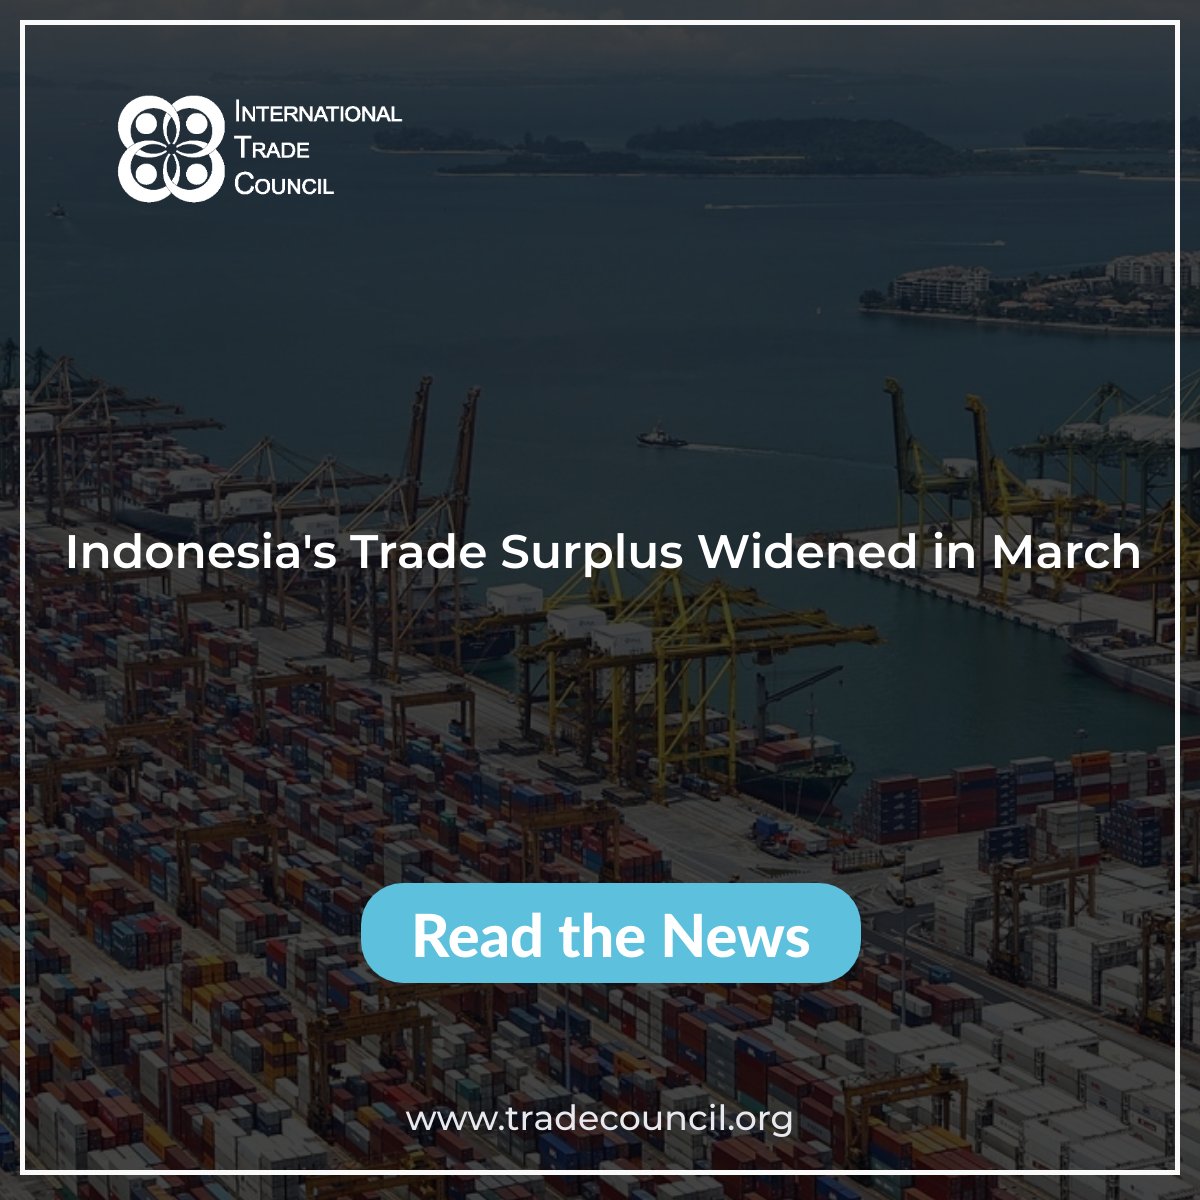 Indonesia's Trade Surplus Widened in March
Read The News: tradecouncil.org/indonesias-tra…
#ITCNewsUpdates #Breakingnews #IndonesiaTrade #TradeSurplus #EconomicForecast #TradeUpdate #MarketAnalysis